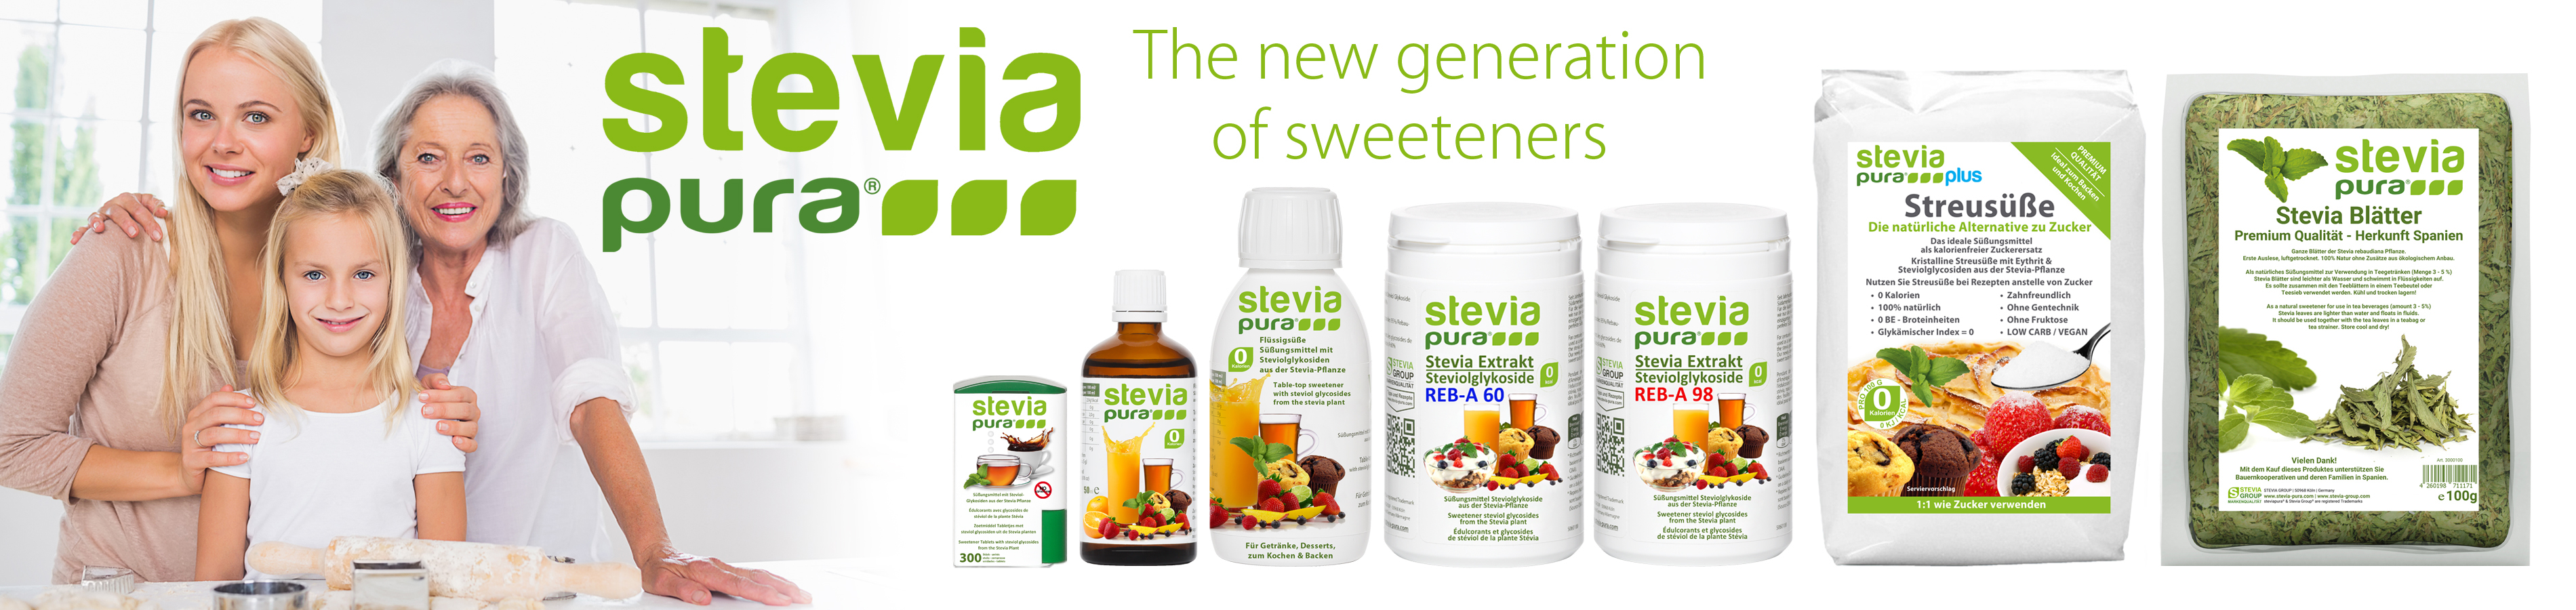 Stevia Group - The new generation of sweeteners: Steviapura